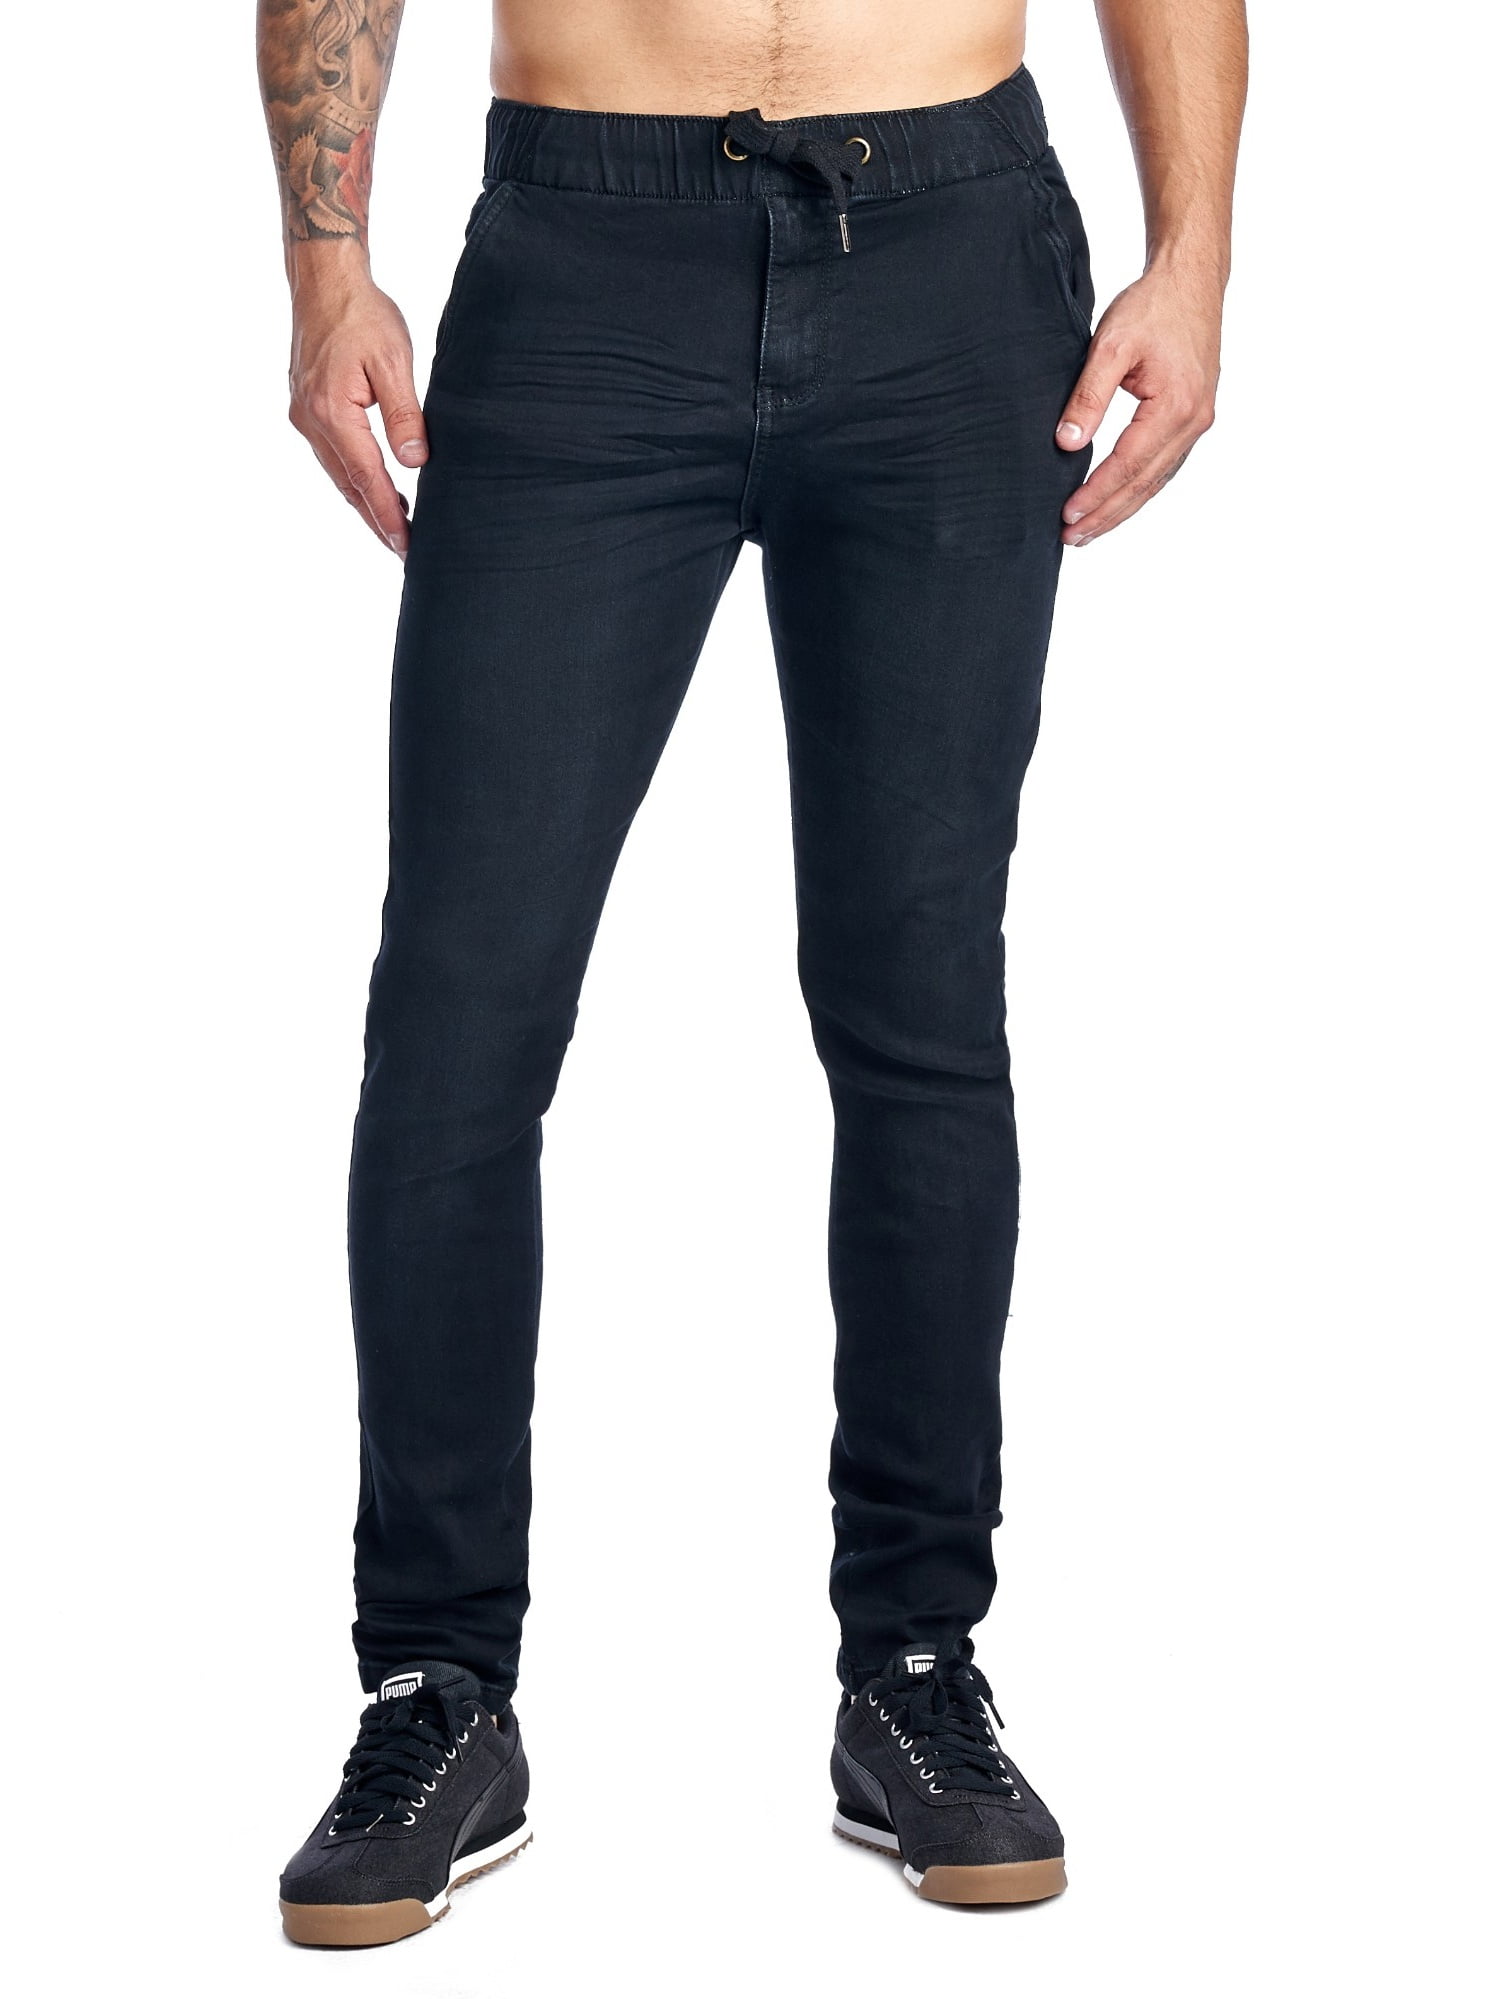 A Jeans Men's Denim Pant Jogger Styling Slim Fit 42121NC Black Large ...